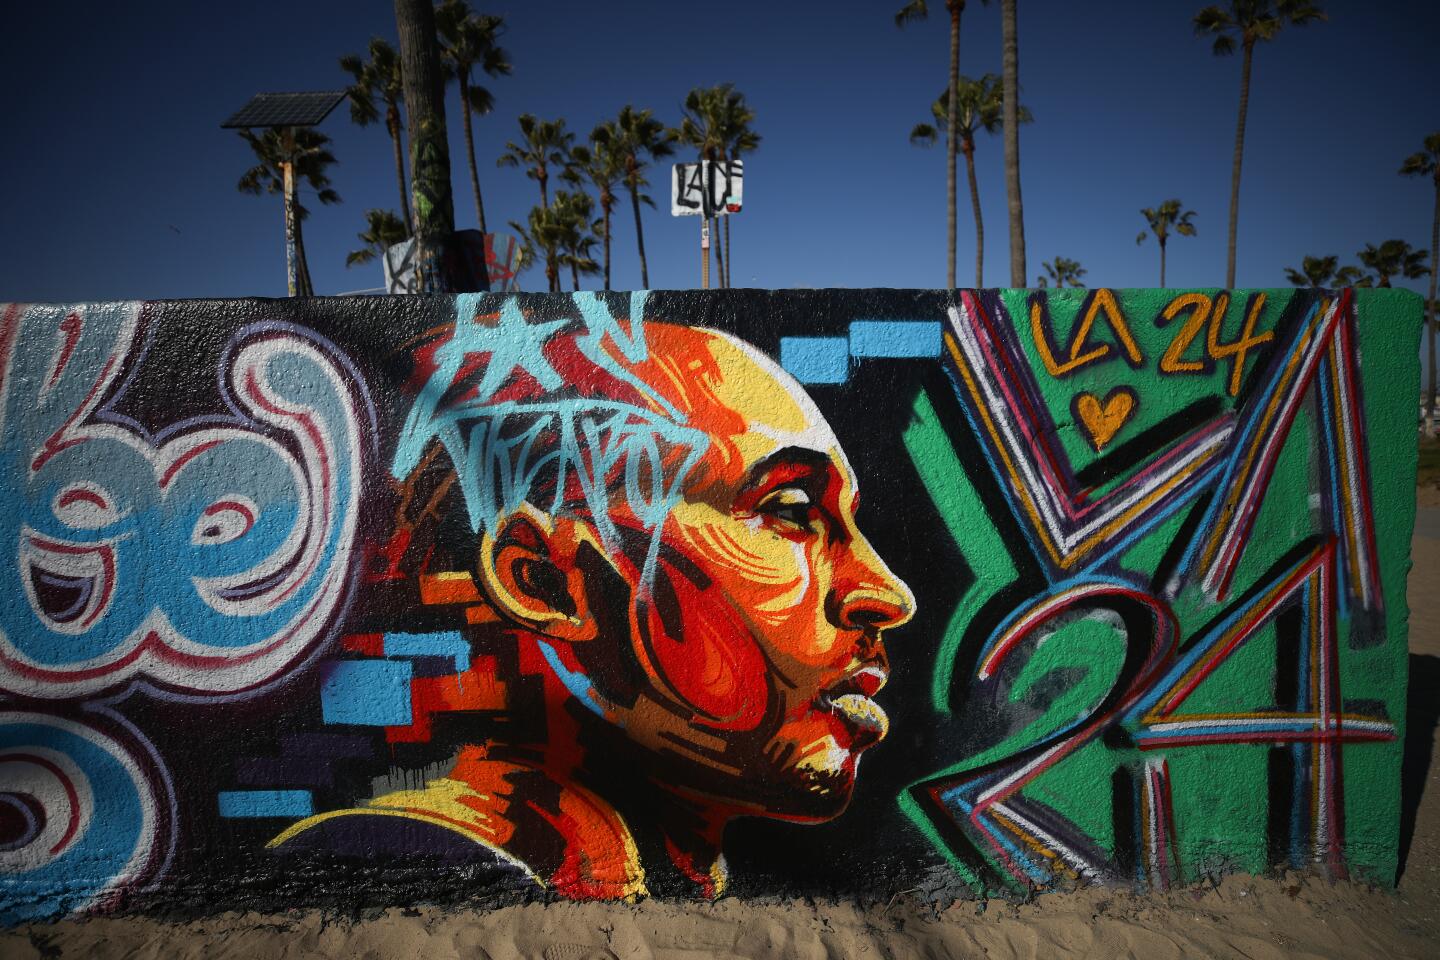 Los Angeles Lakers Legend Kobe Bryant Memorialized Across L.A. In Murals